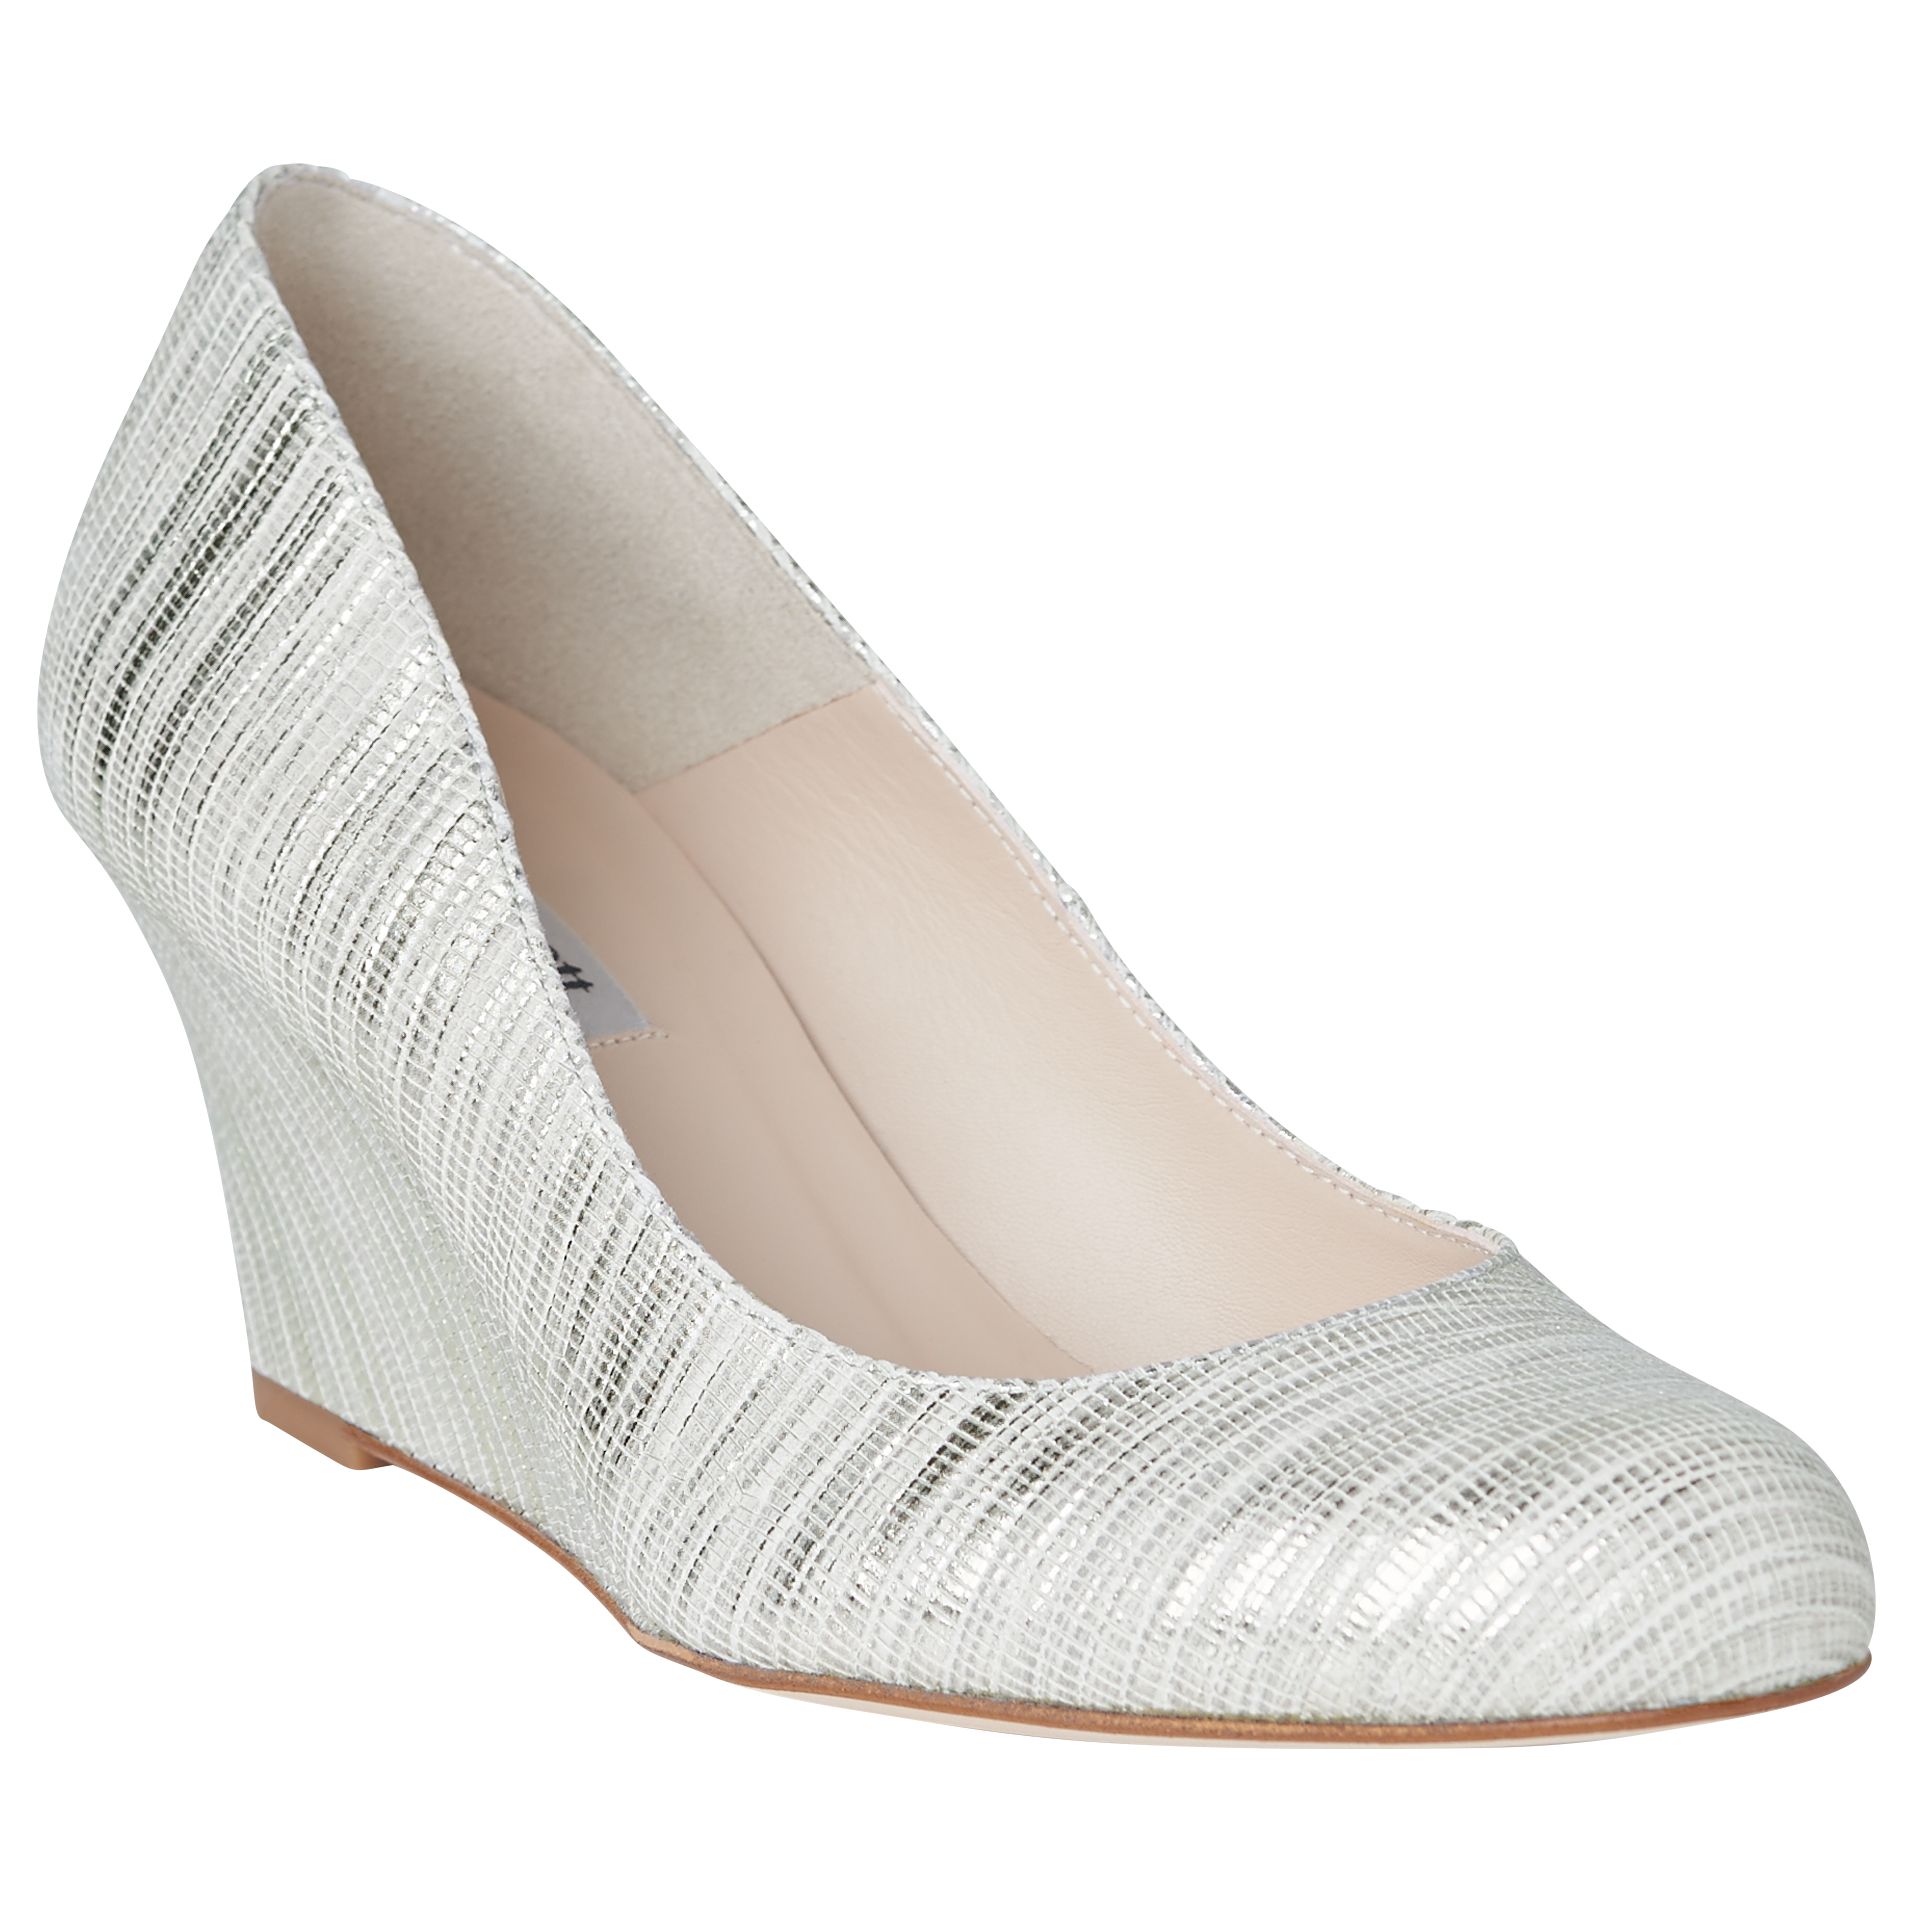 L.K. Bennett Zahara Wedge Heeled Court Shoes, Metallic Cream, 6.5